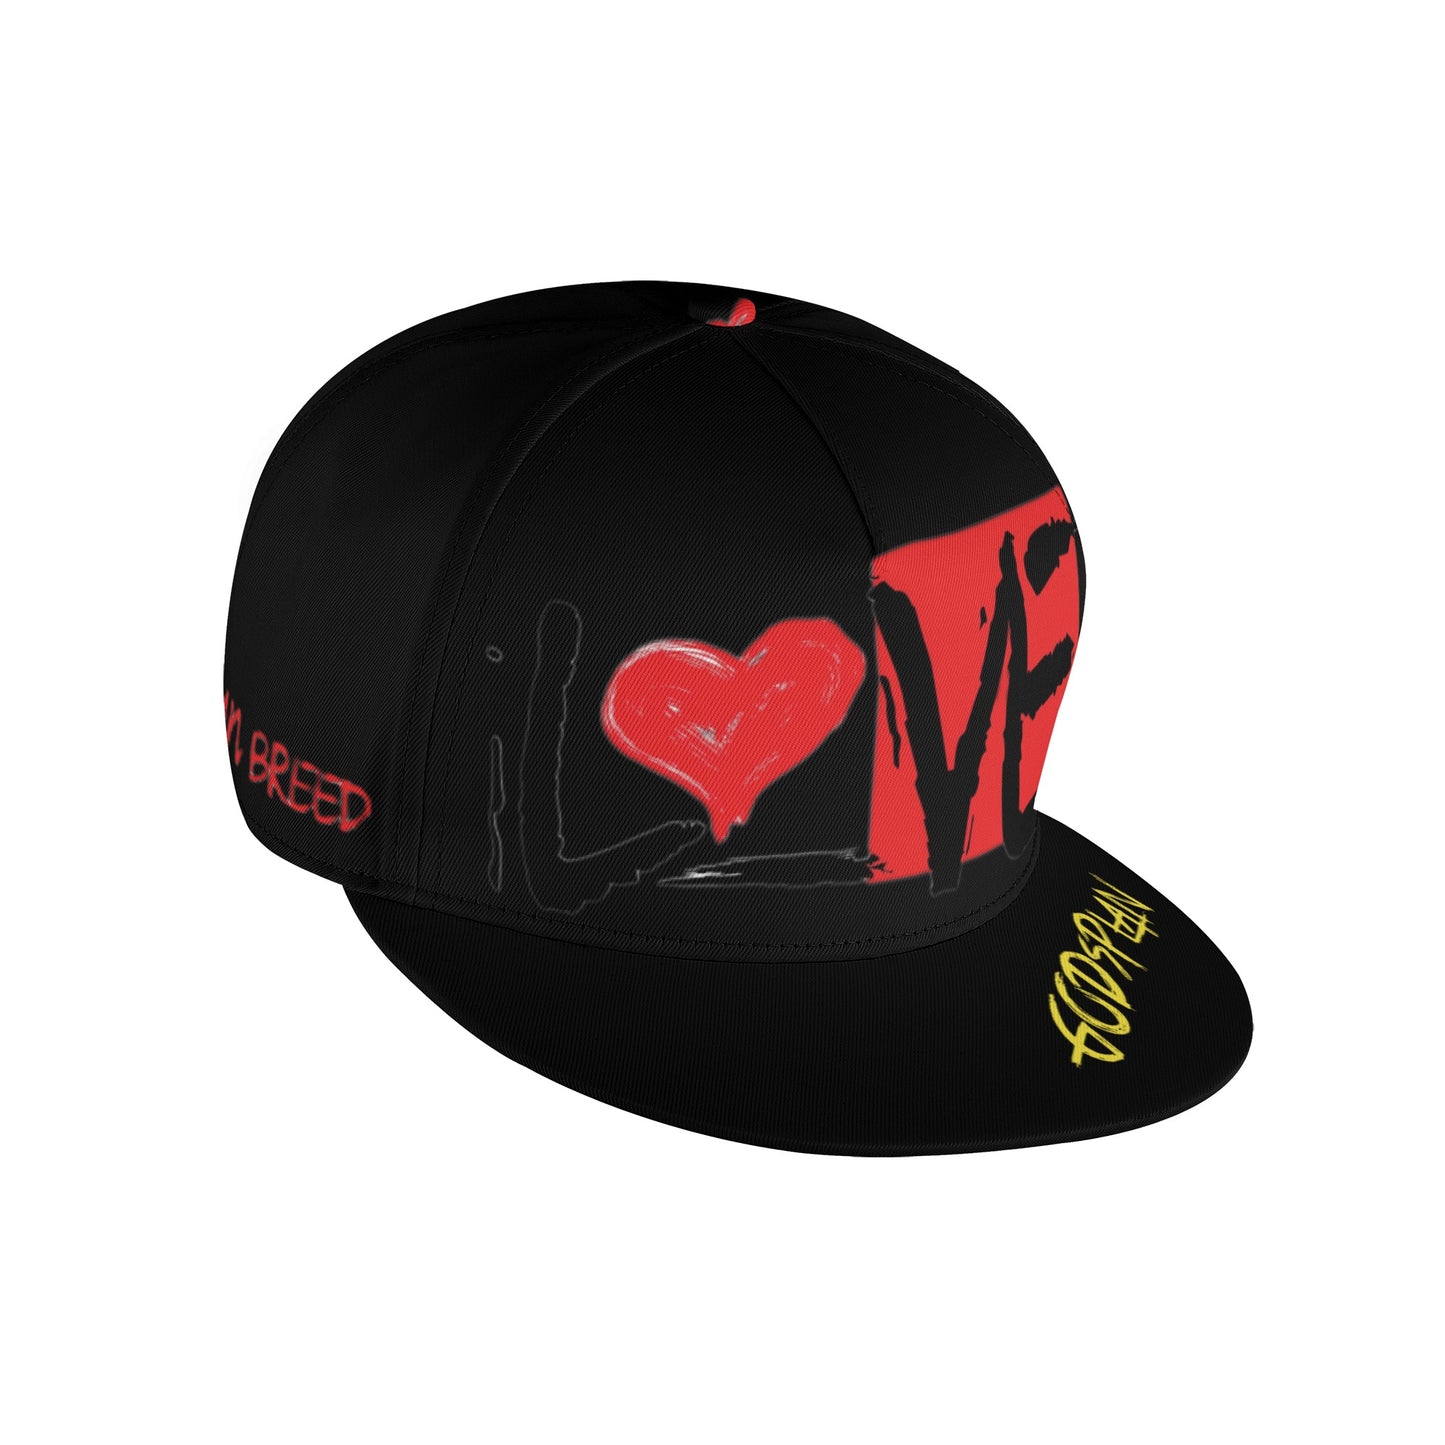 Sean Breed Love Hip-hop Hat